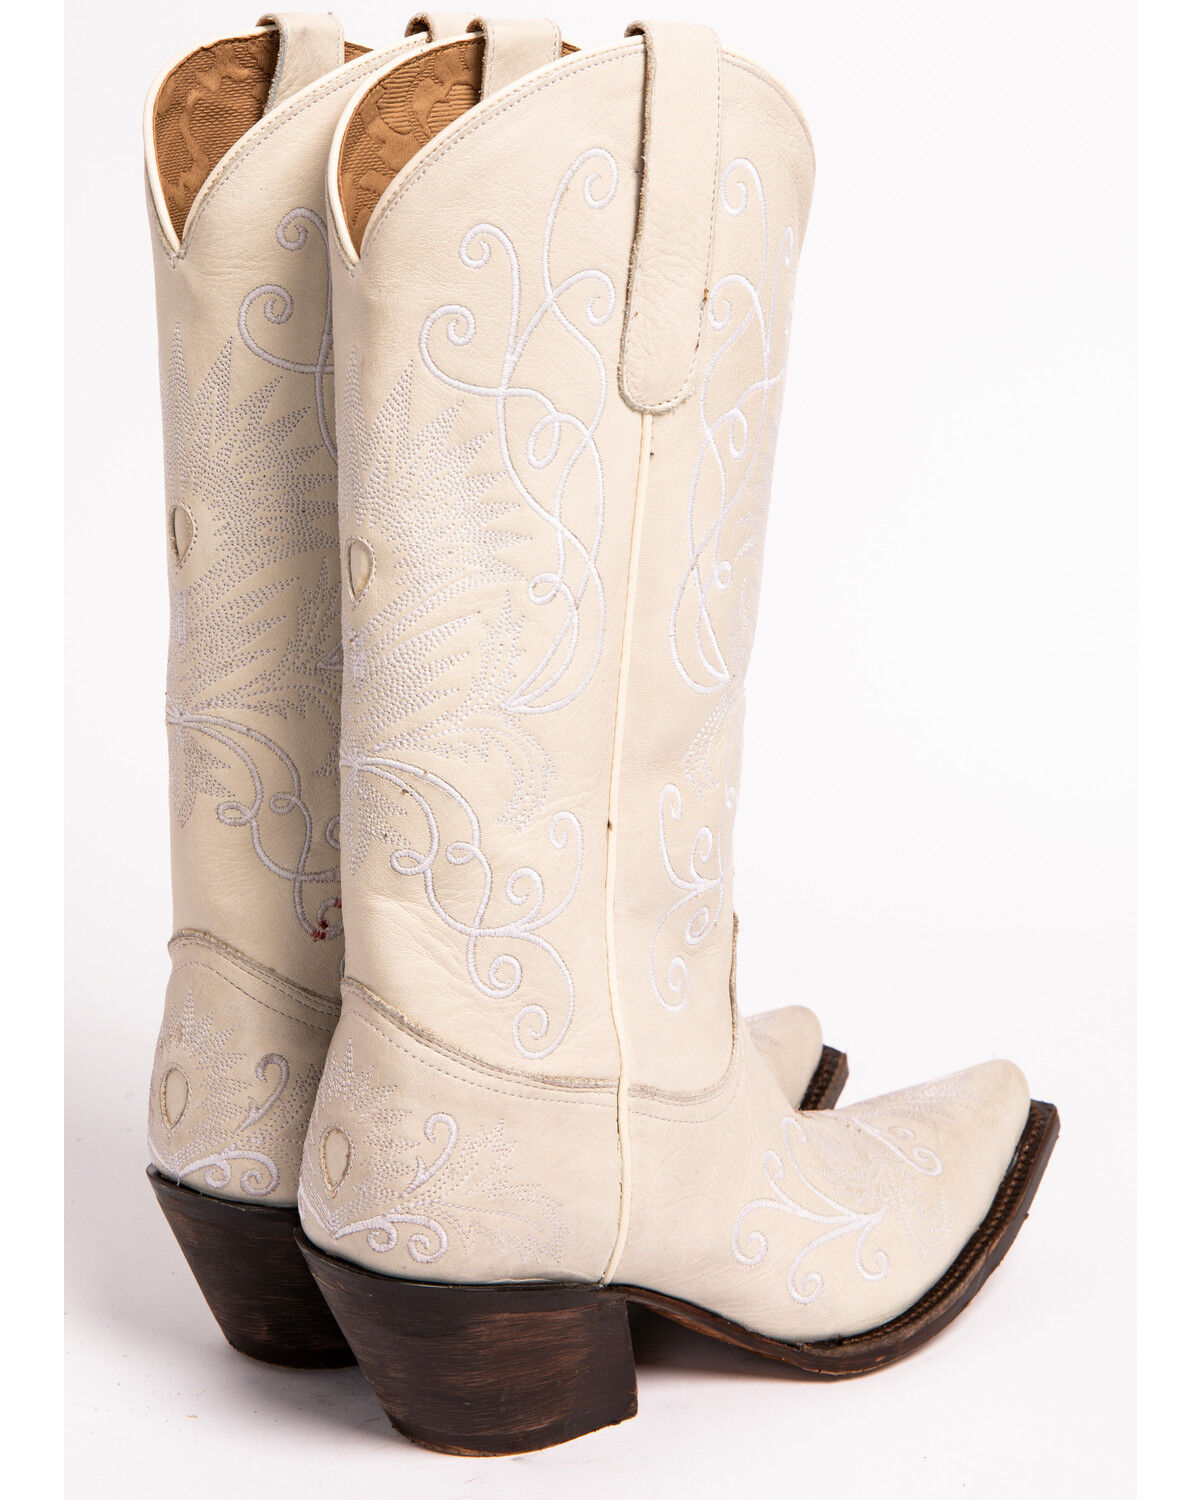 tony lama boots for ladies